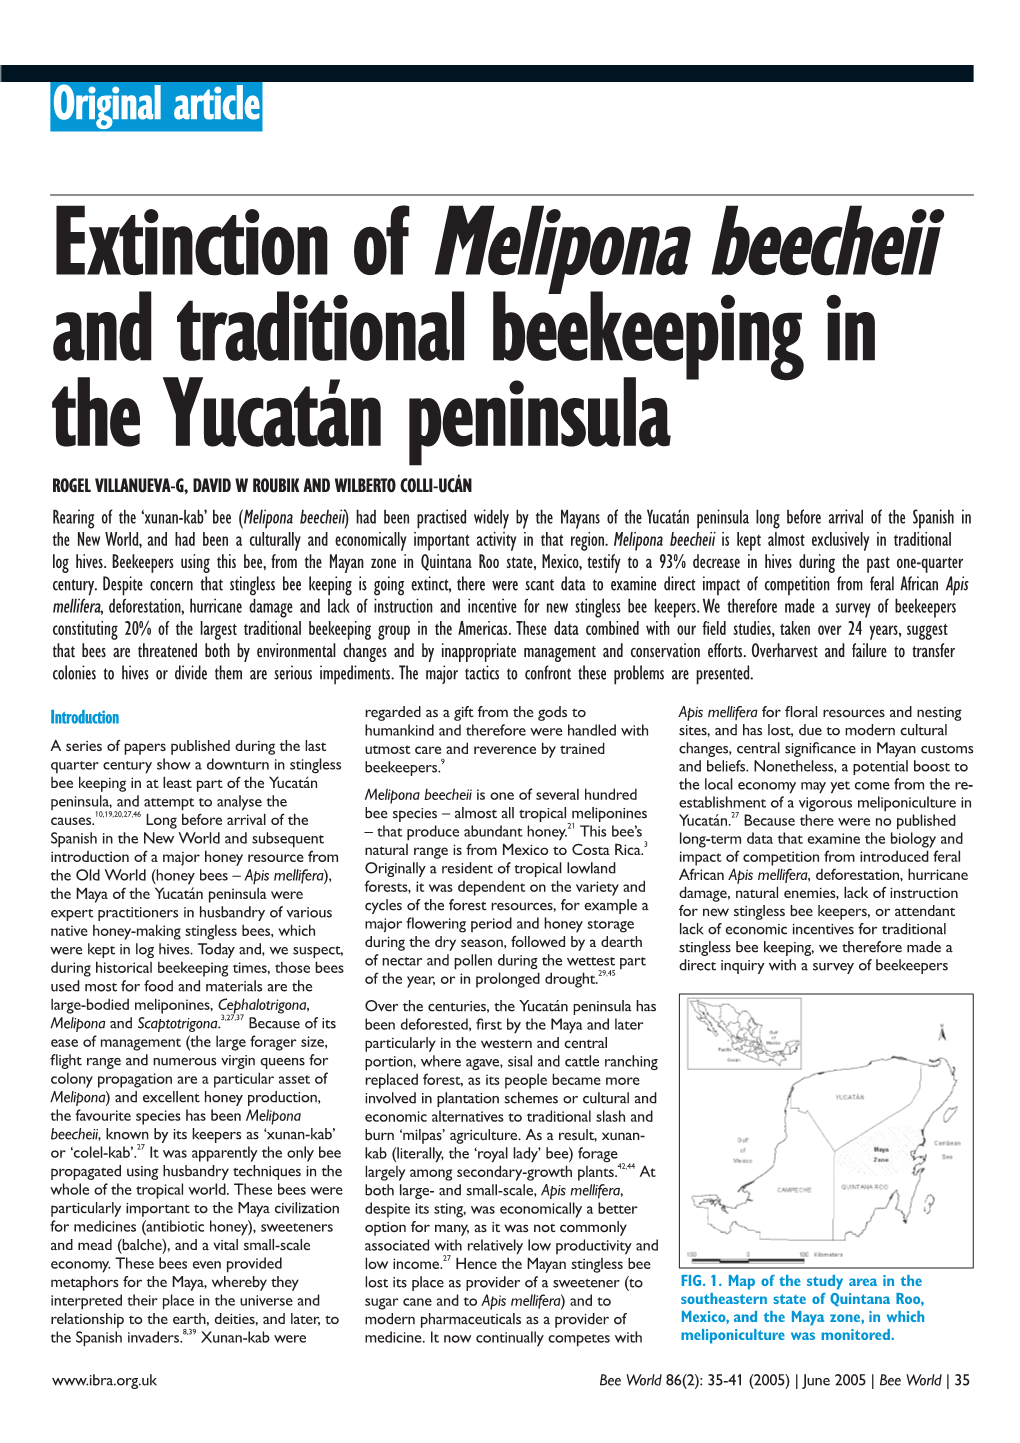 Extinction of Melipona Beecheii and Traditional Beekeeping in The